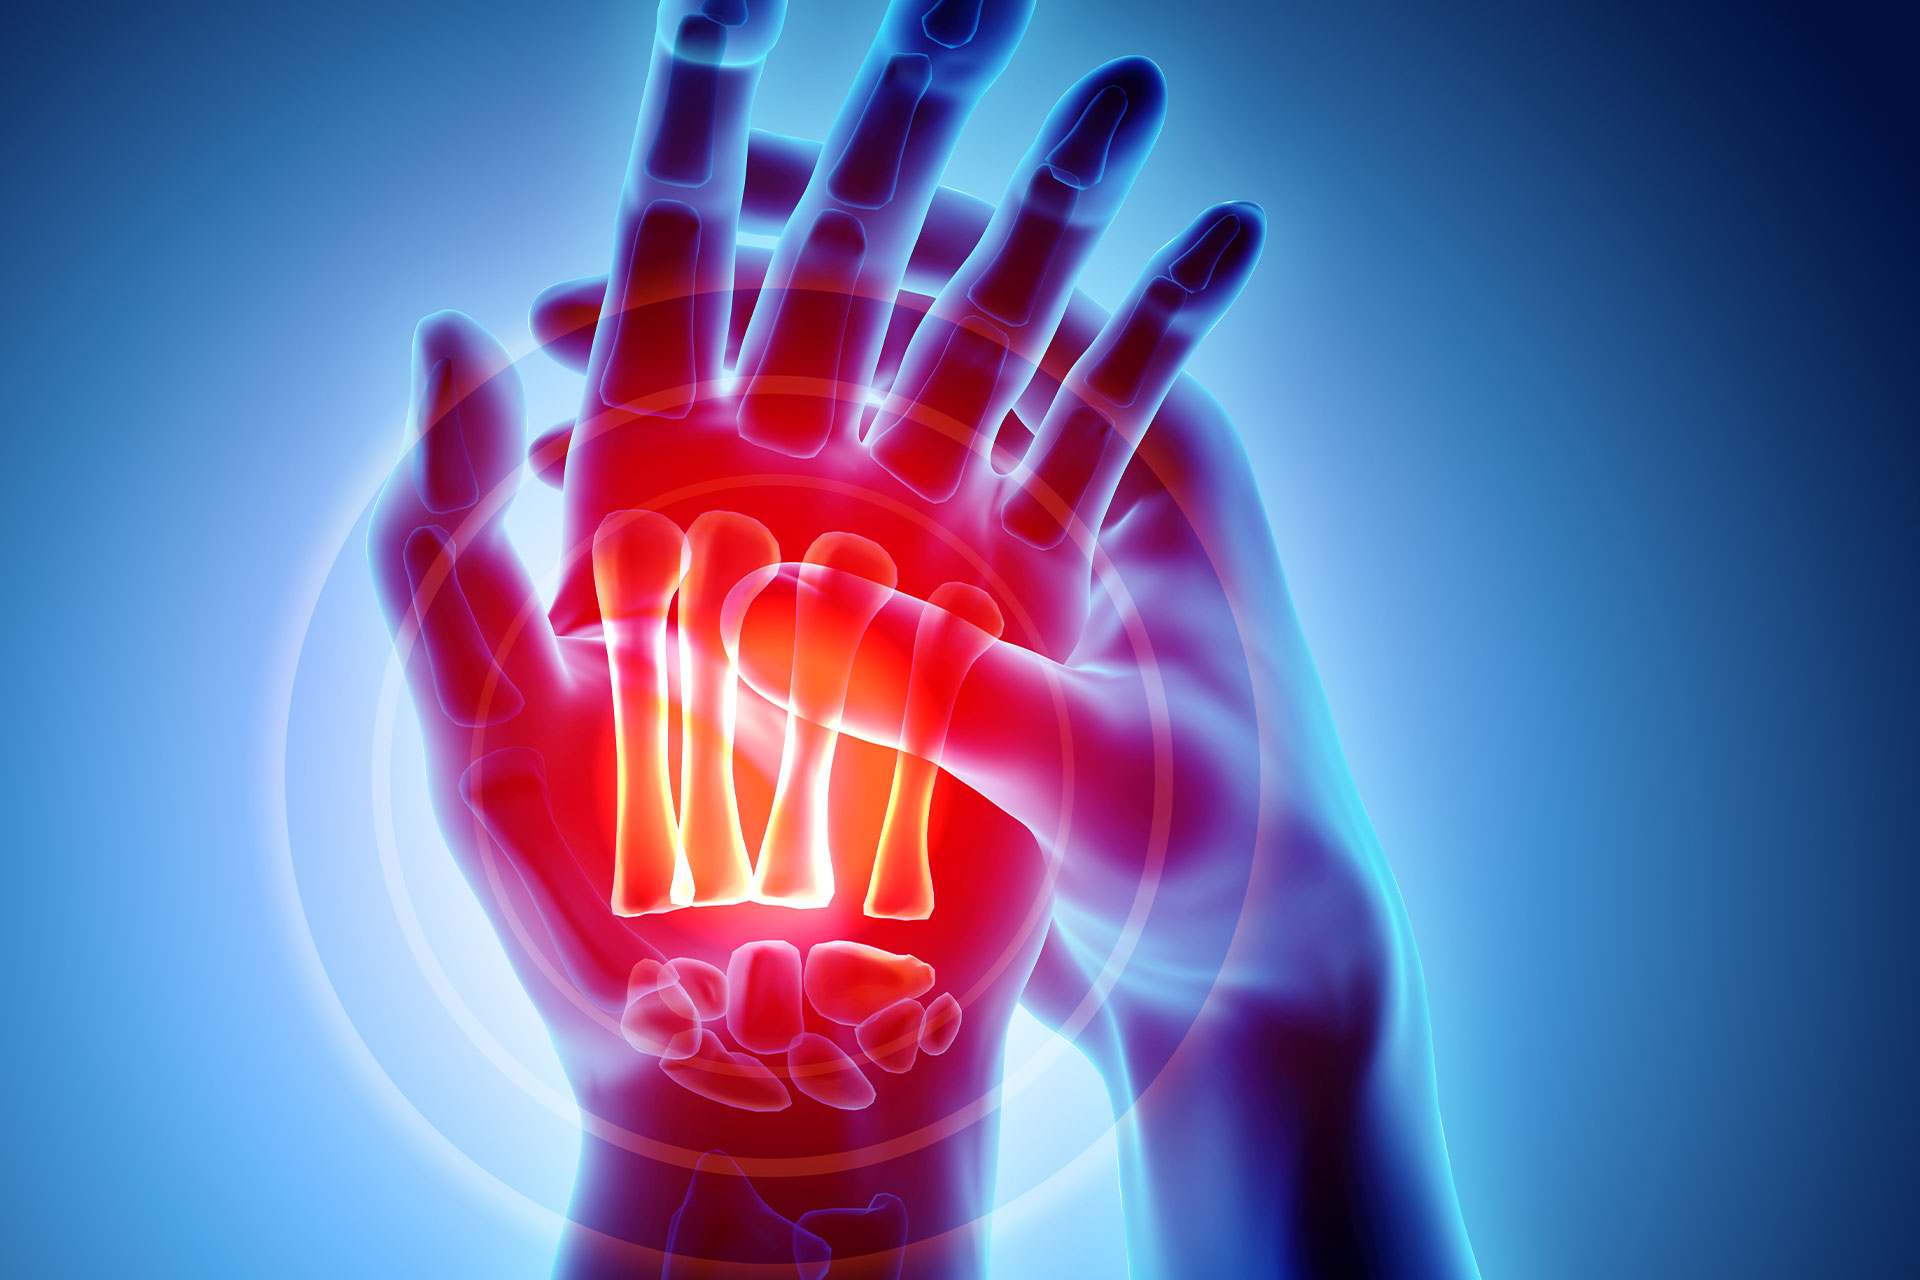 x-ray showing Rheumatoid Arthritis joints and pain